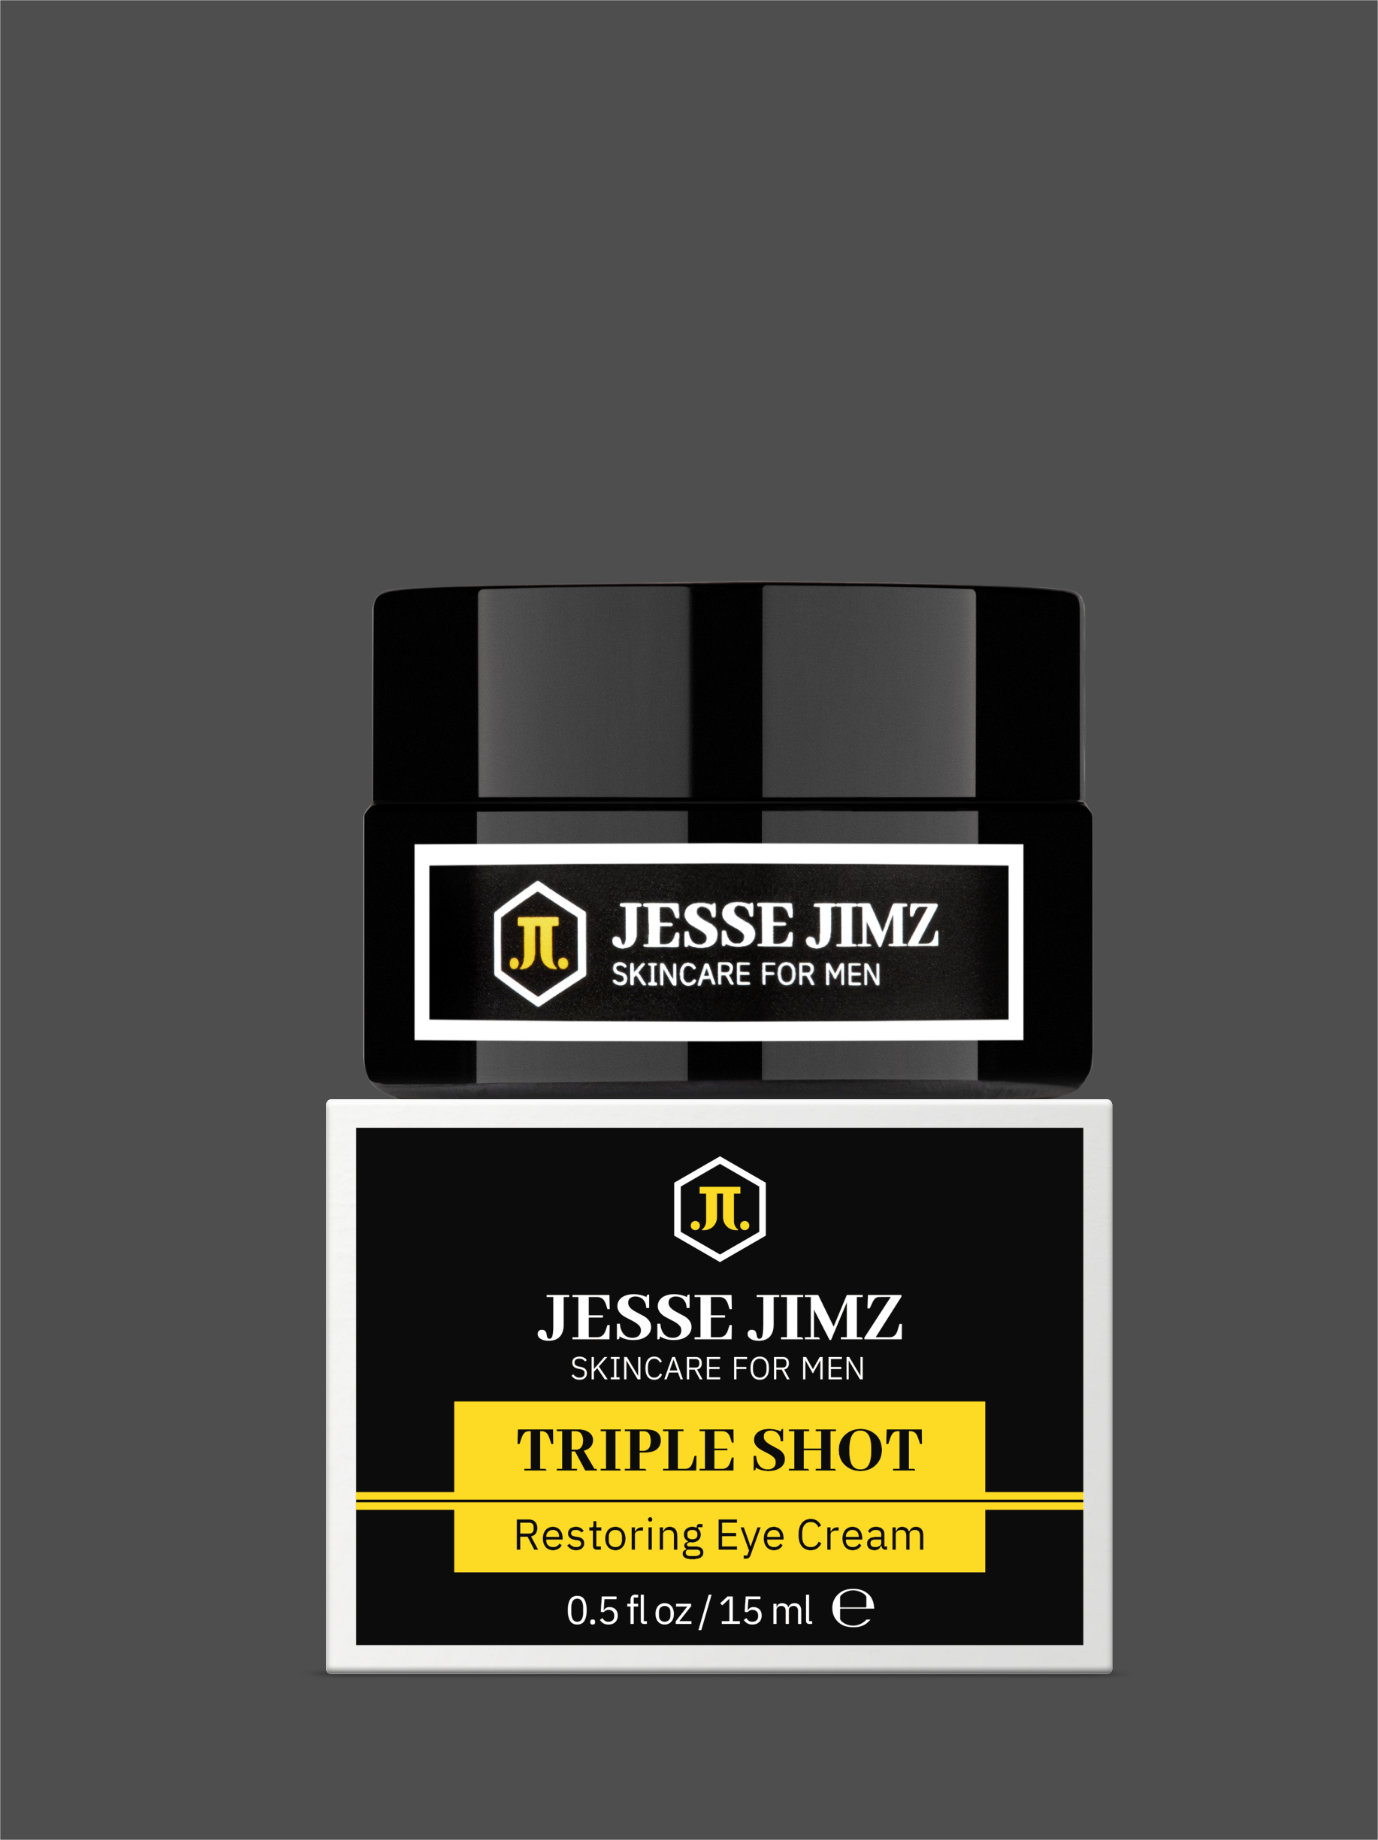 Jesse Jimz Tripple Shot